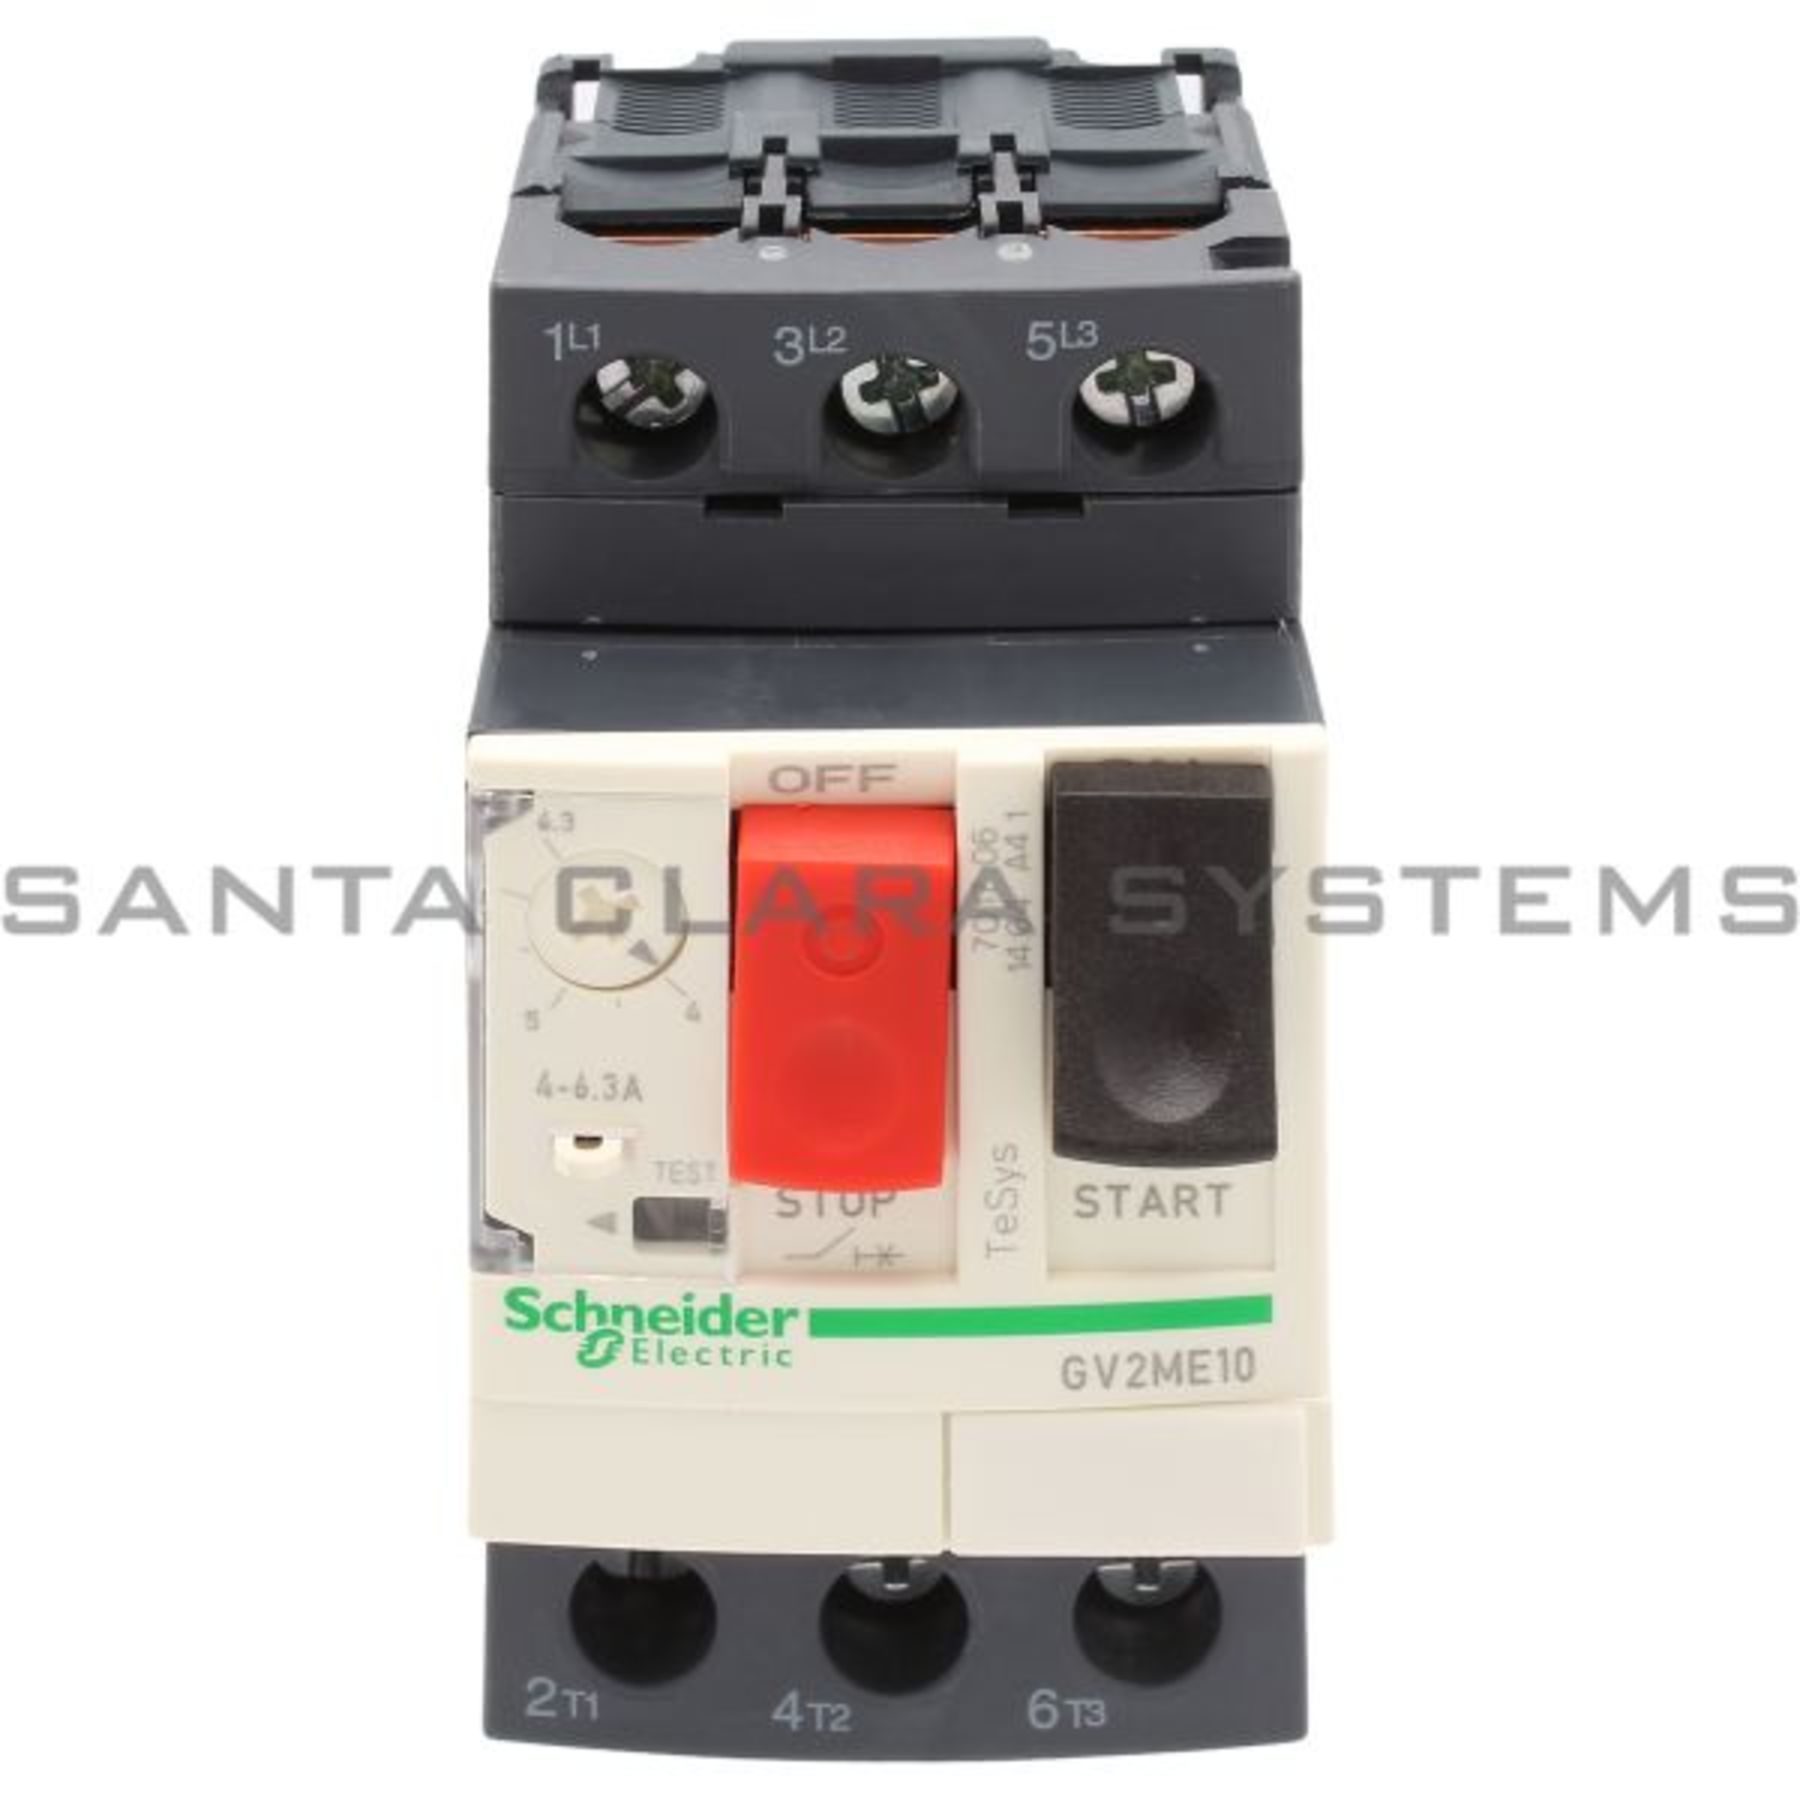 Telemecanique GV2M10 Industrial Control System for sale online